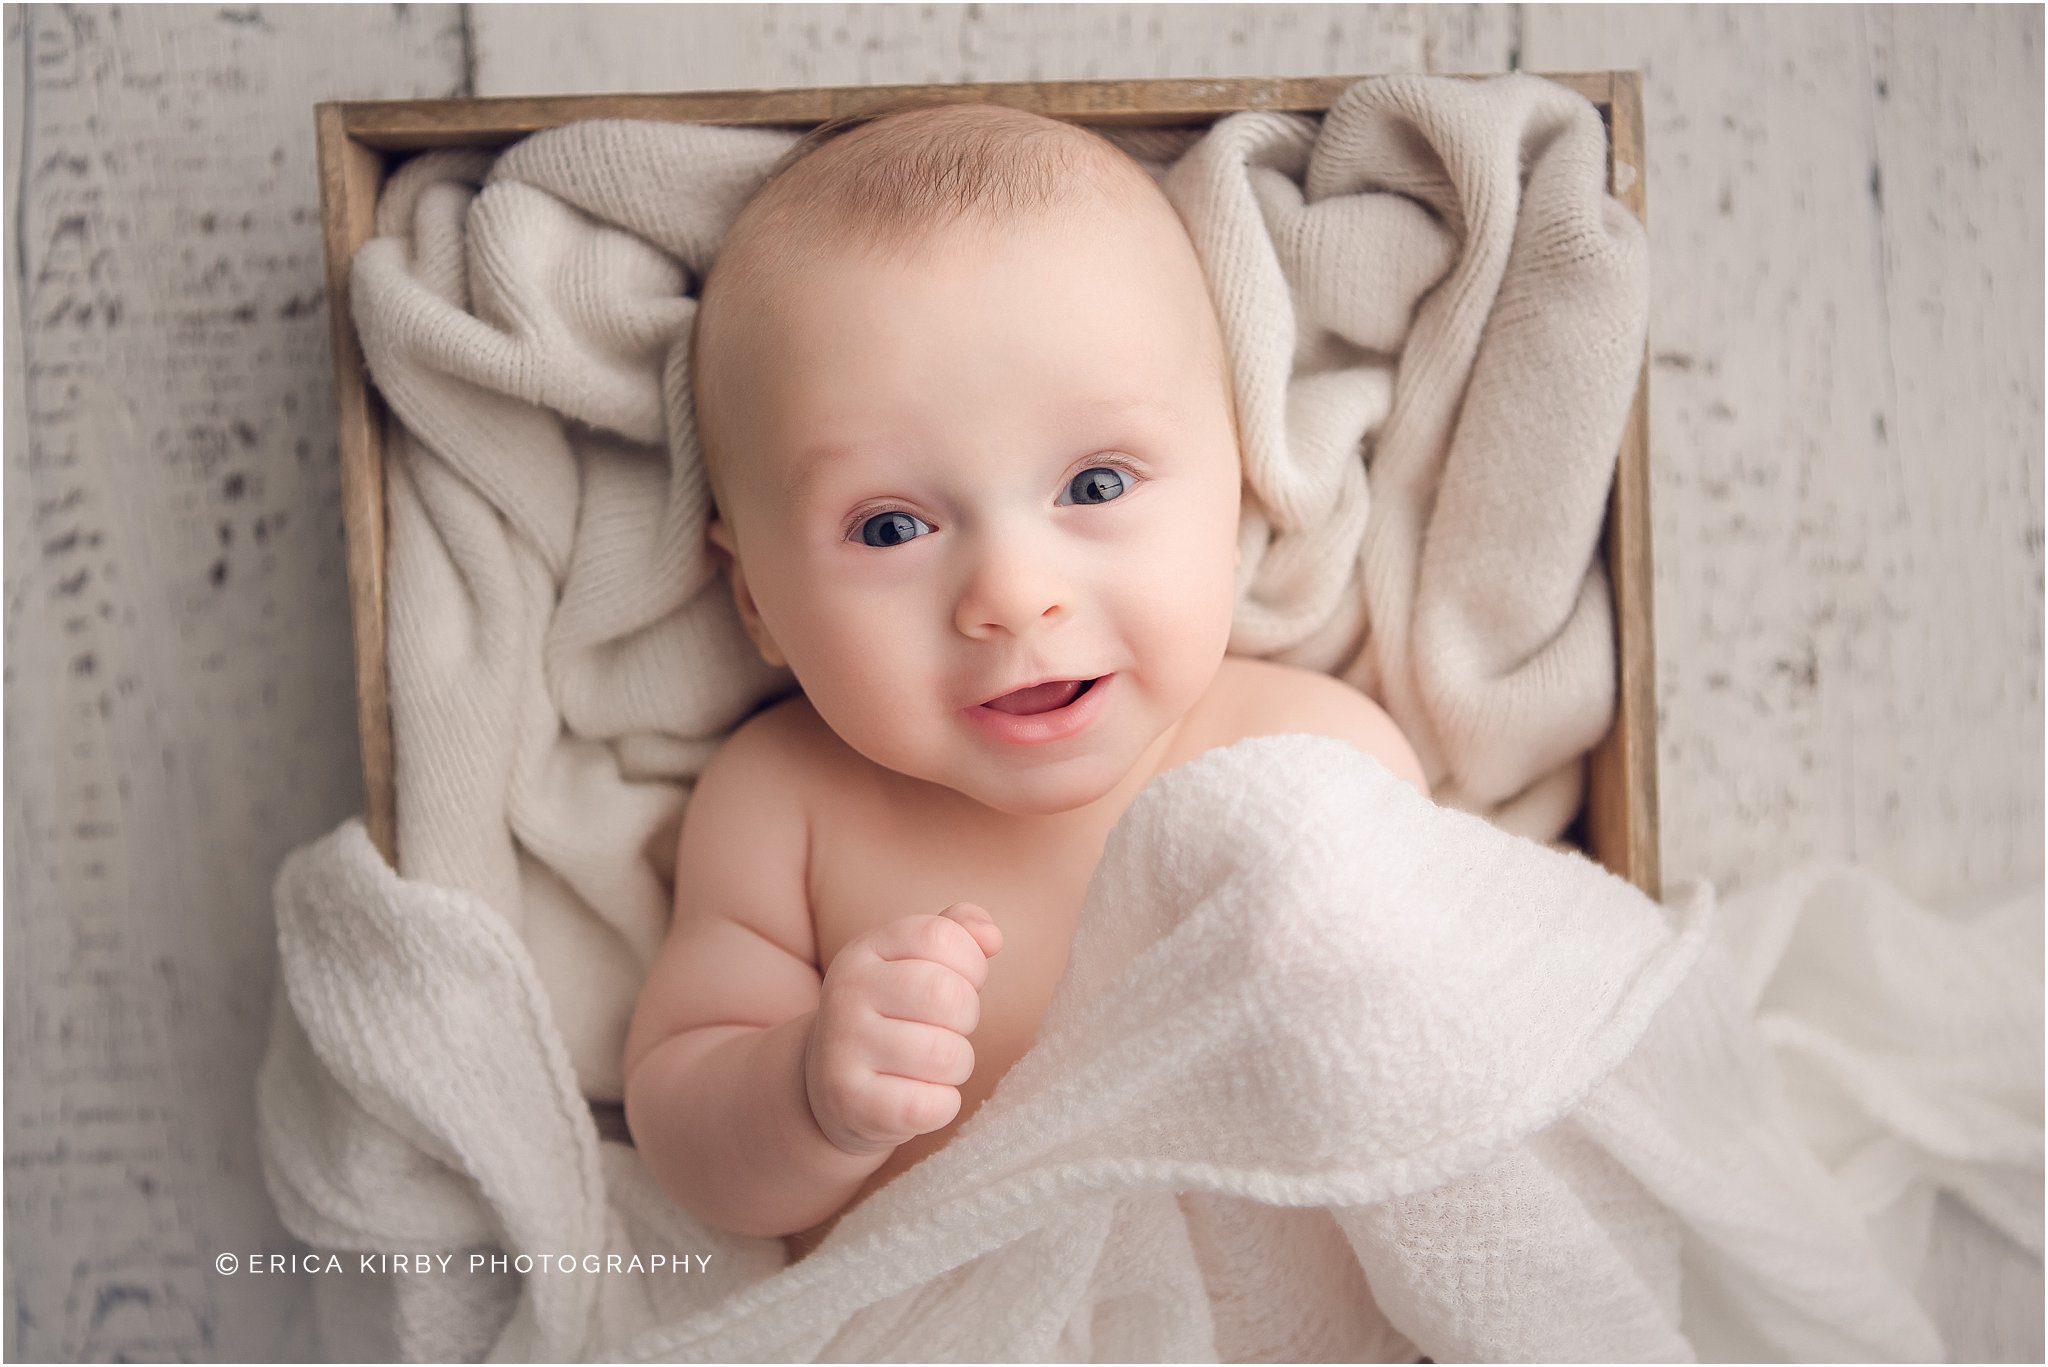 baby milestone photo session NWA - 3 month old baby milestone photo session bentonville ar | erica kirby photography